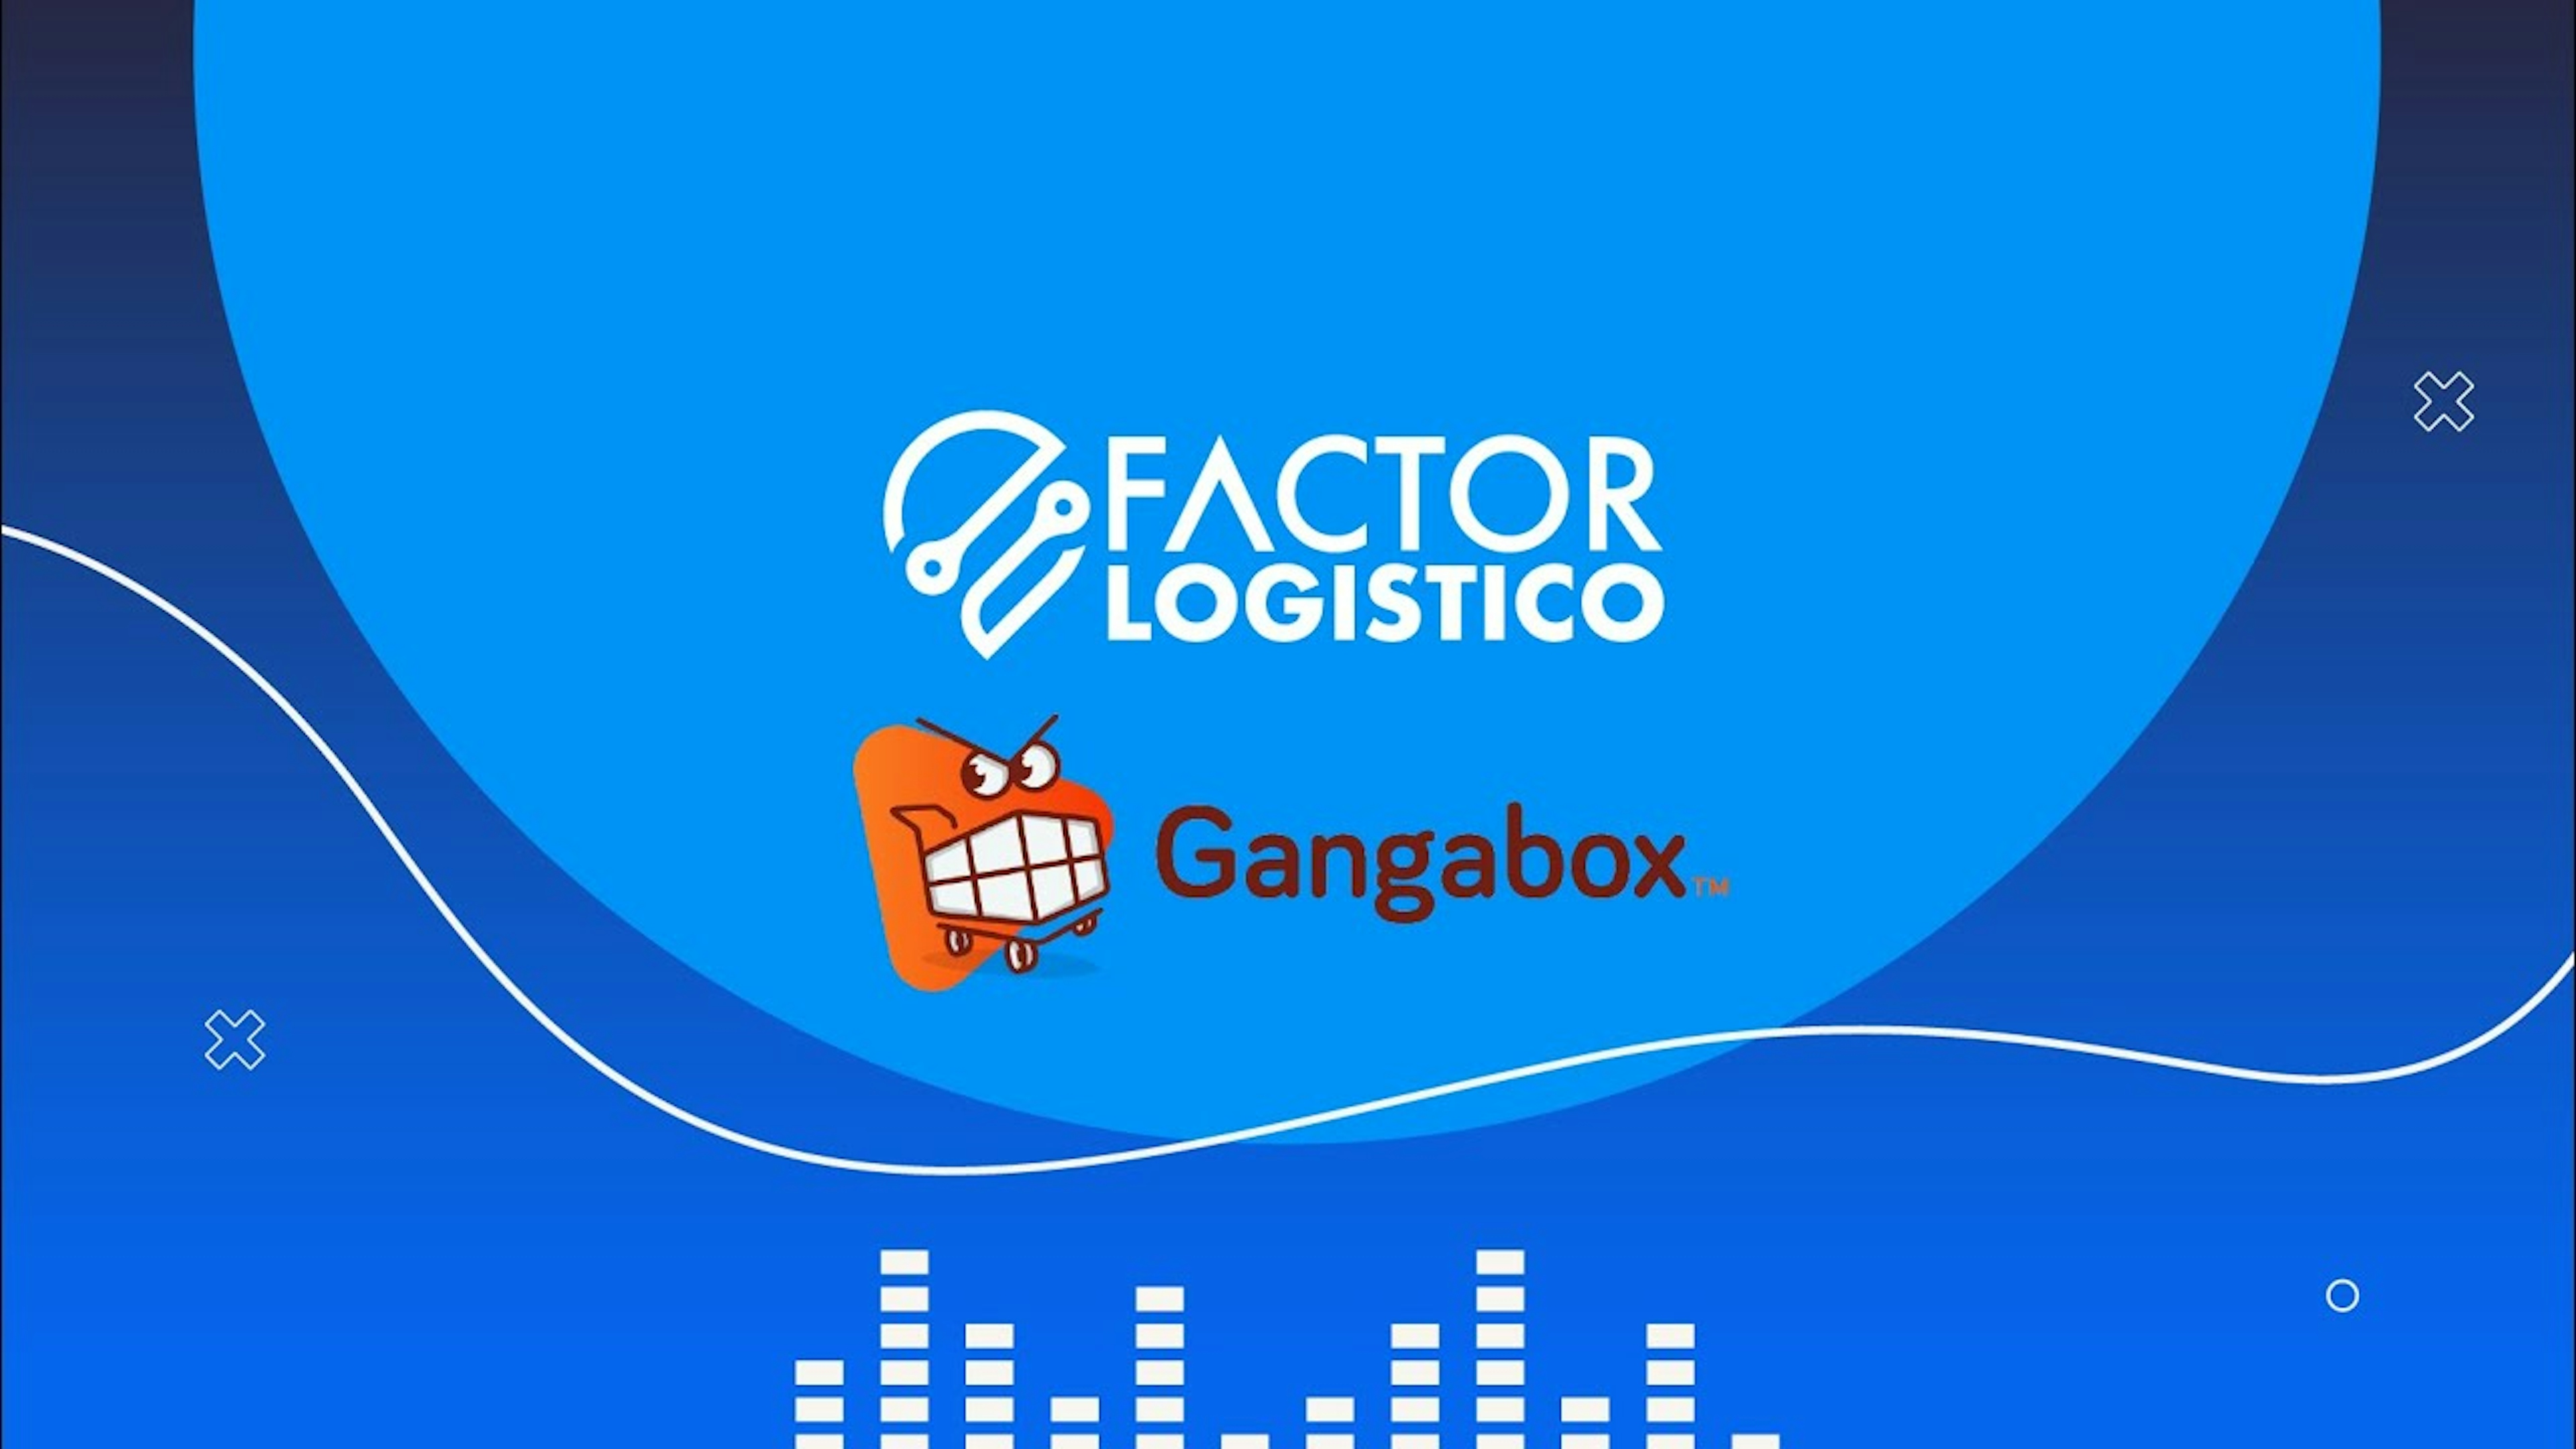 Factor logístico - Gangabox